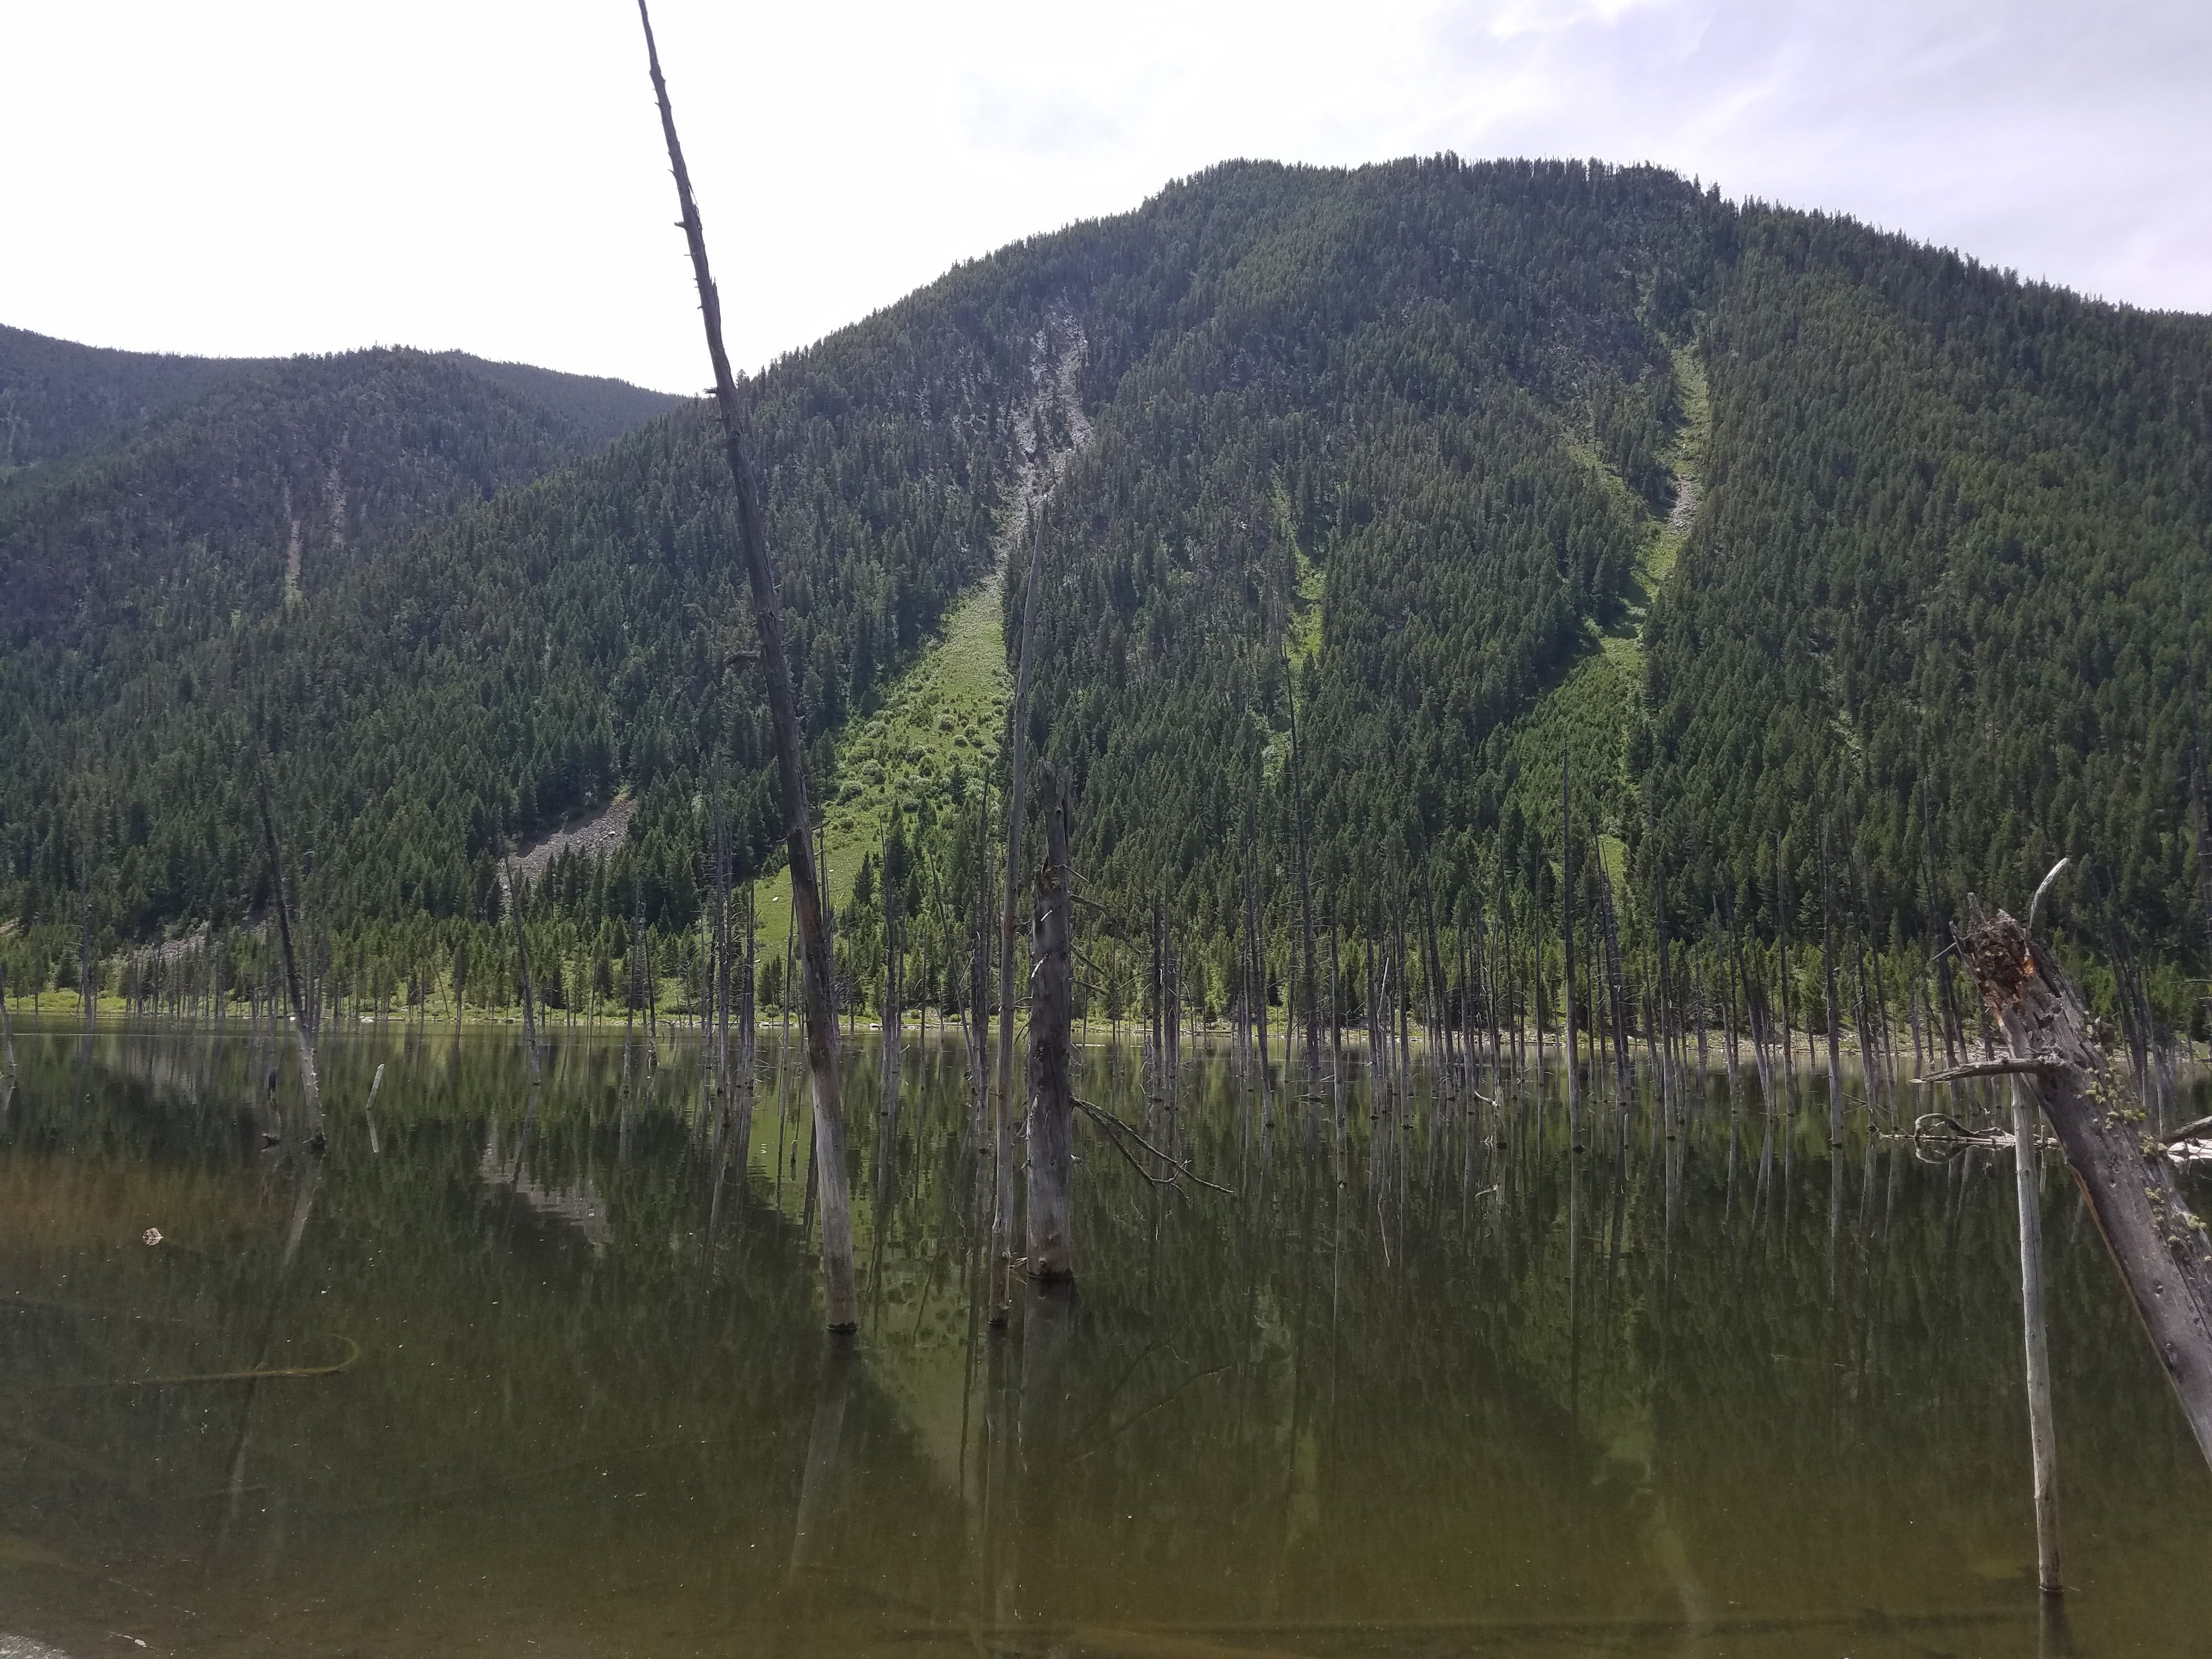 Earthquake Lake from the trail head along Loop A